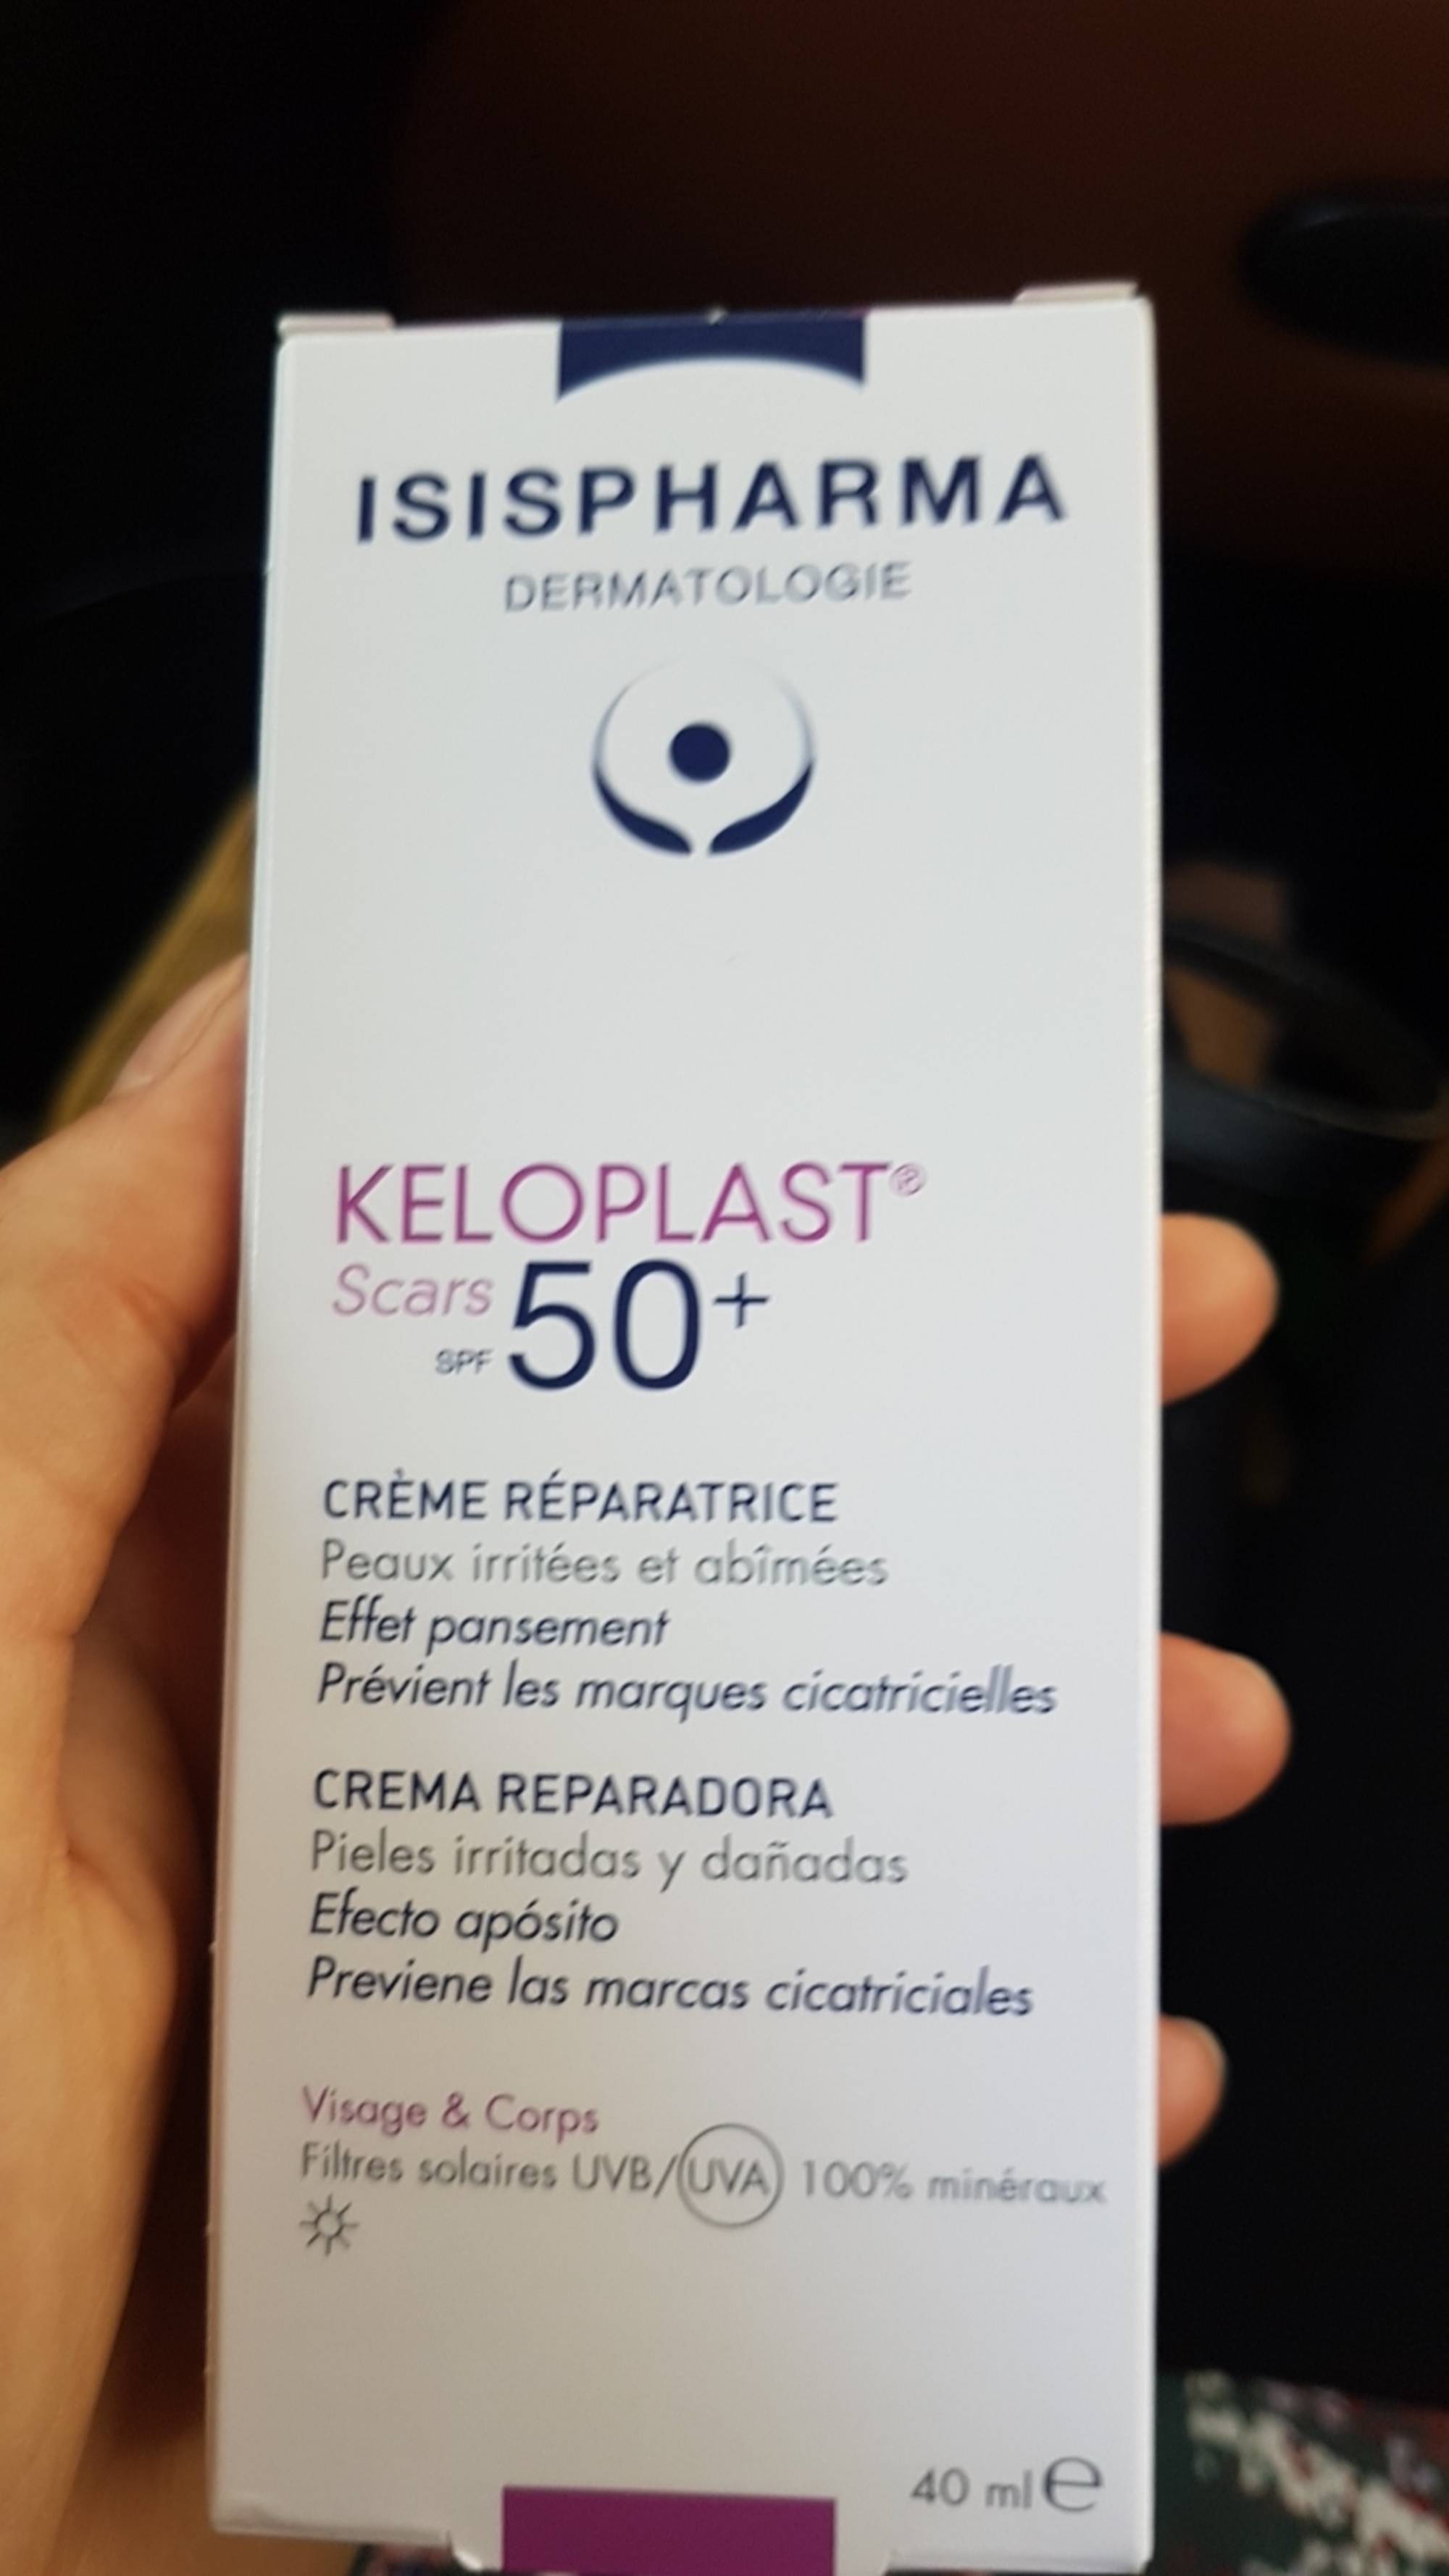 ISIS PHARMA - Keloplast scars SPF 50+ - Crème réparatrice